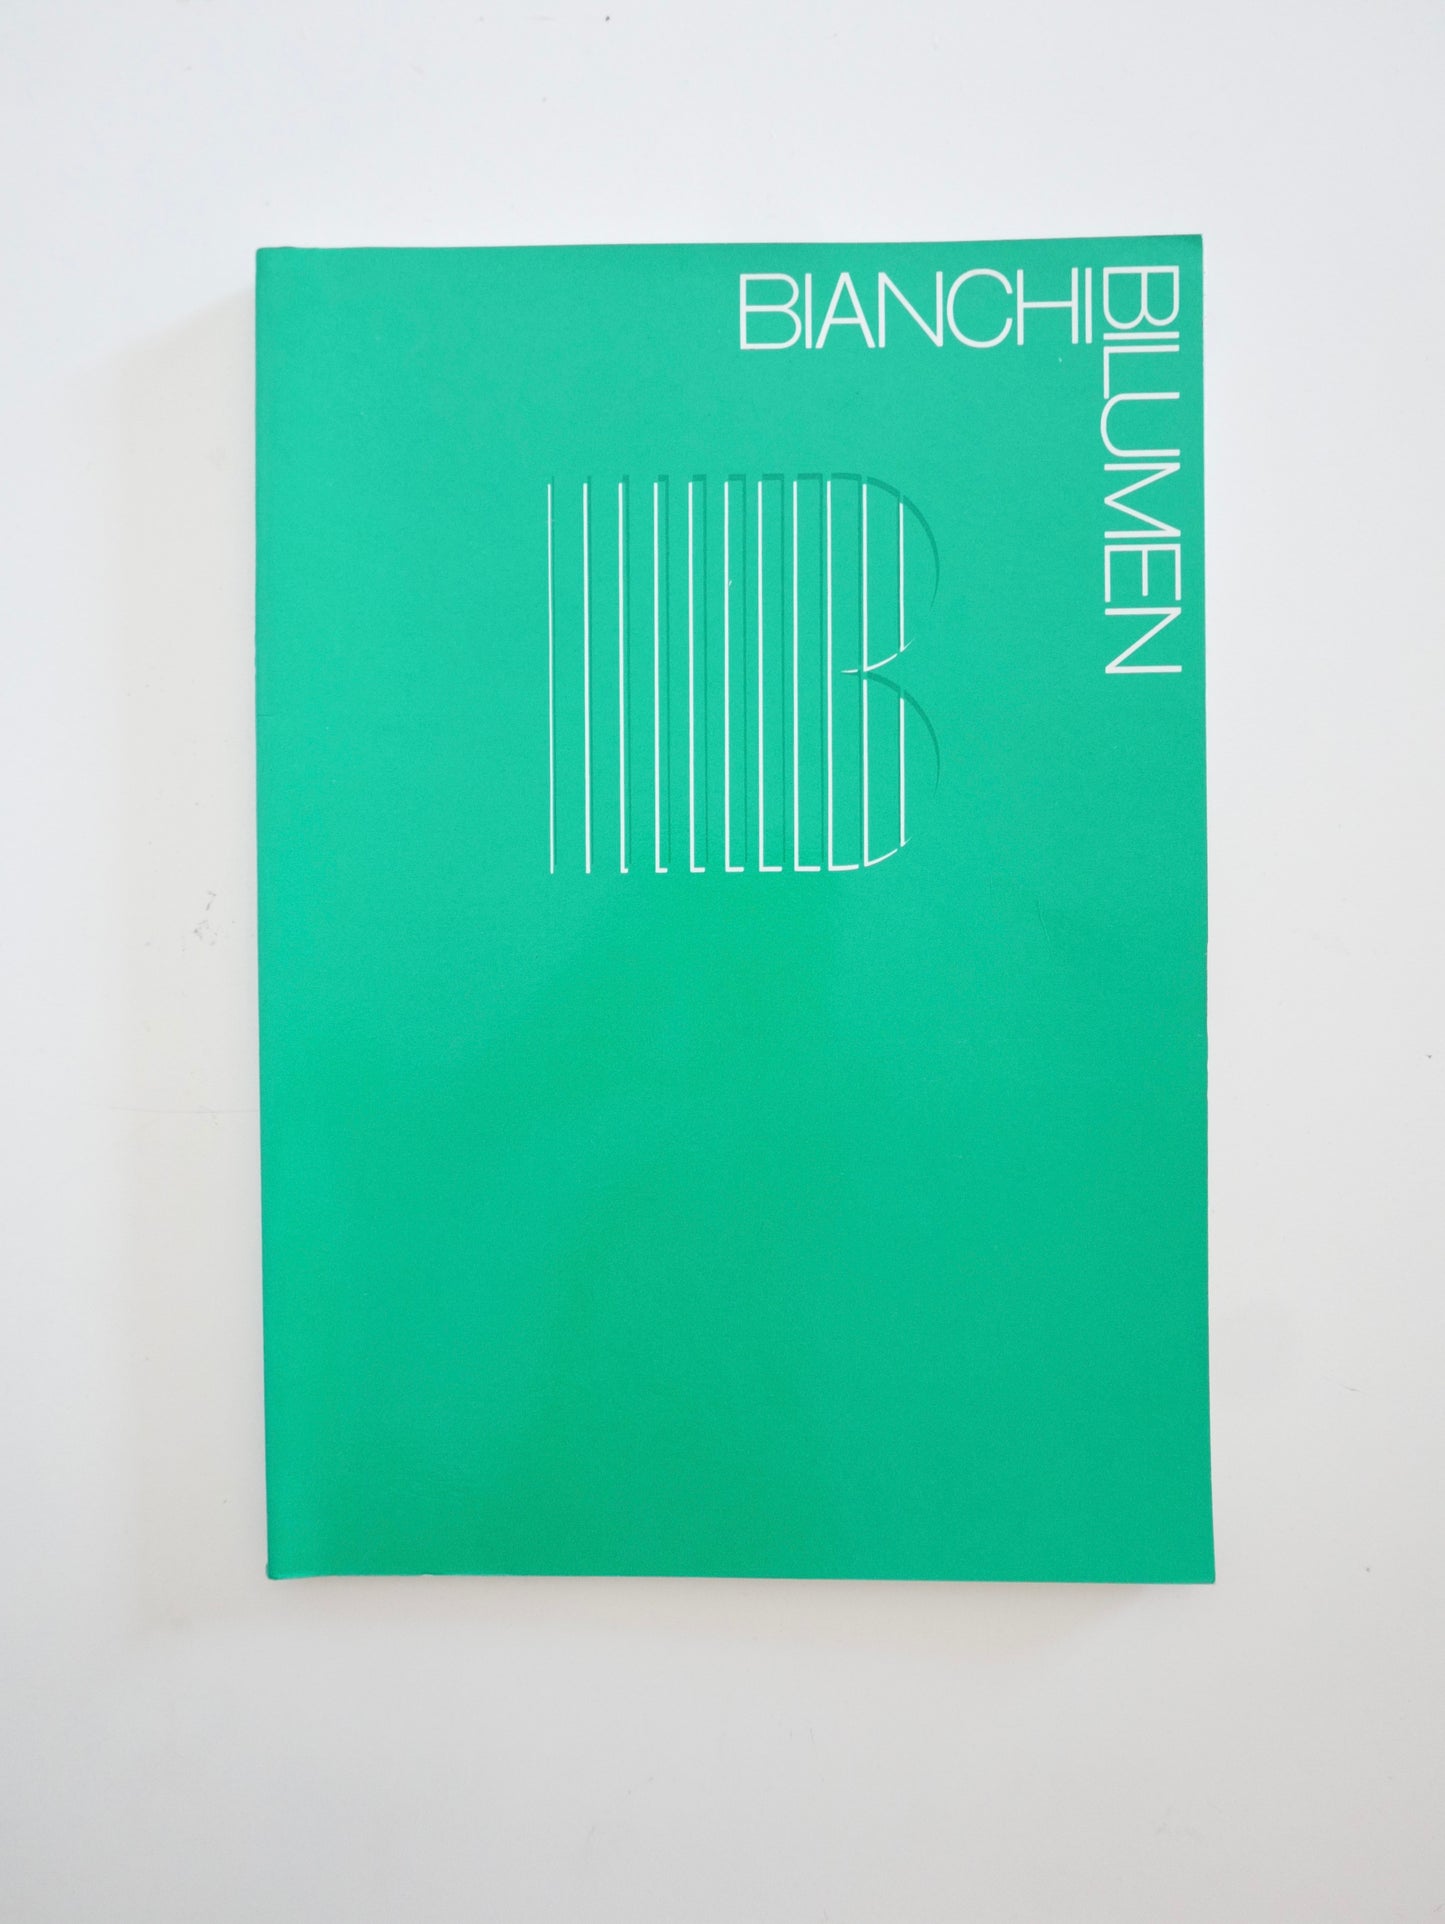 Bianchi Bilumen 1983 Catalog